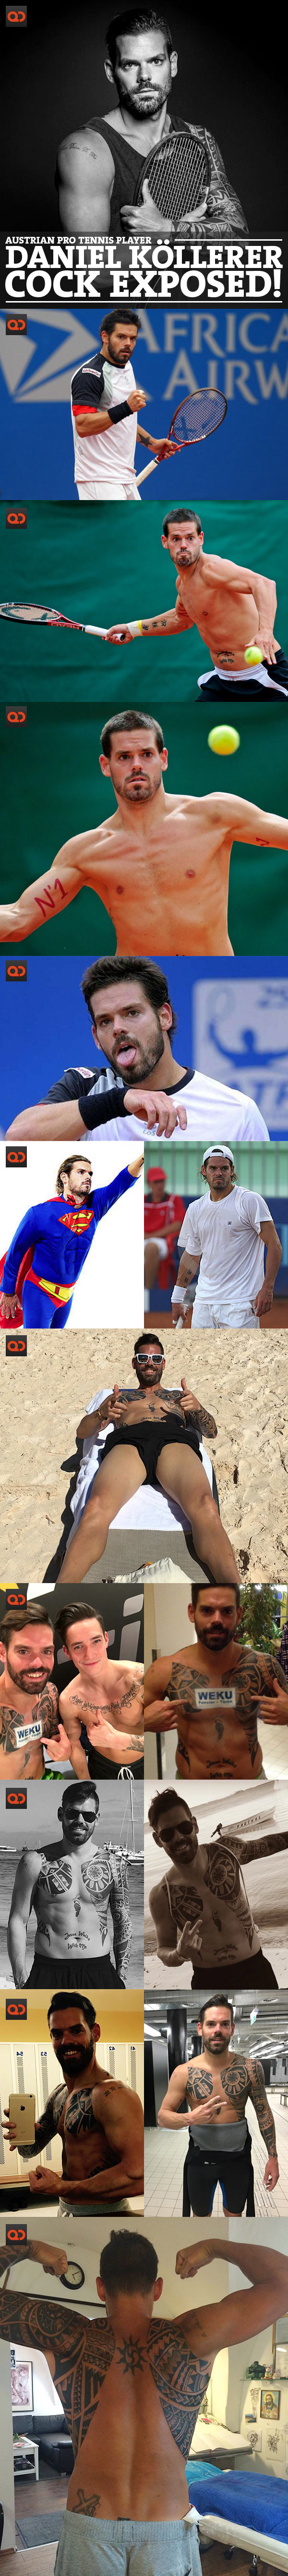 qc-austrian_pro_tennis_player_daniel_kollerer_exposed-collage01